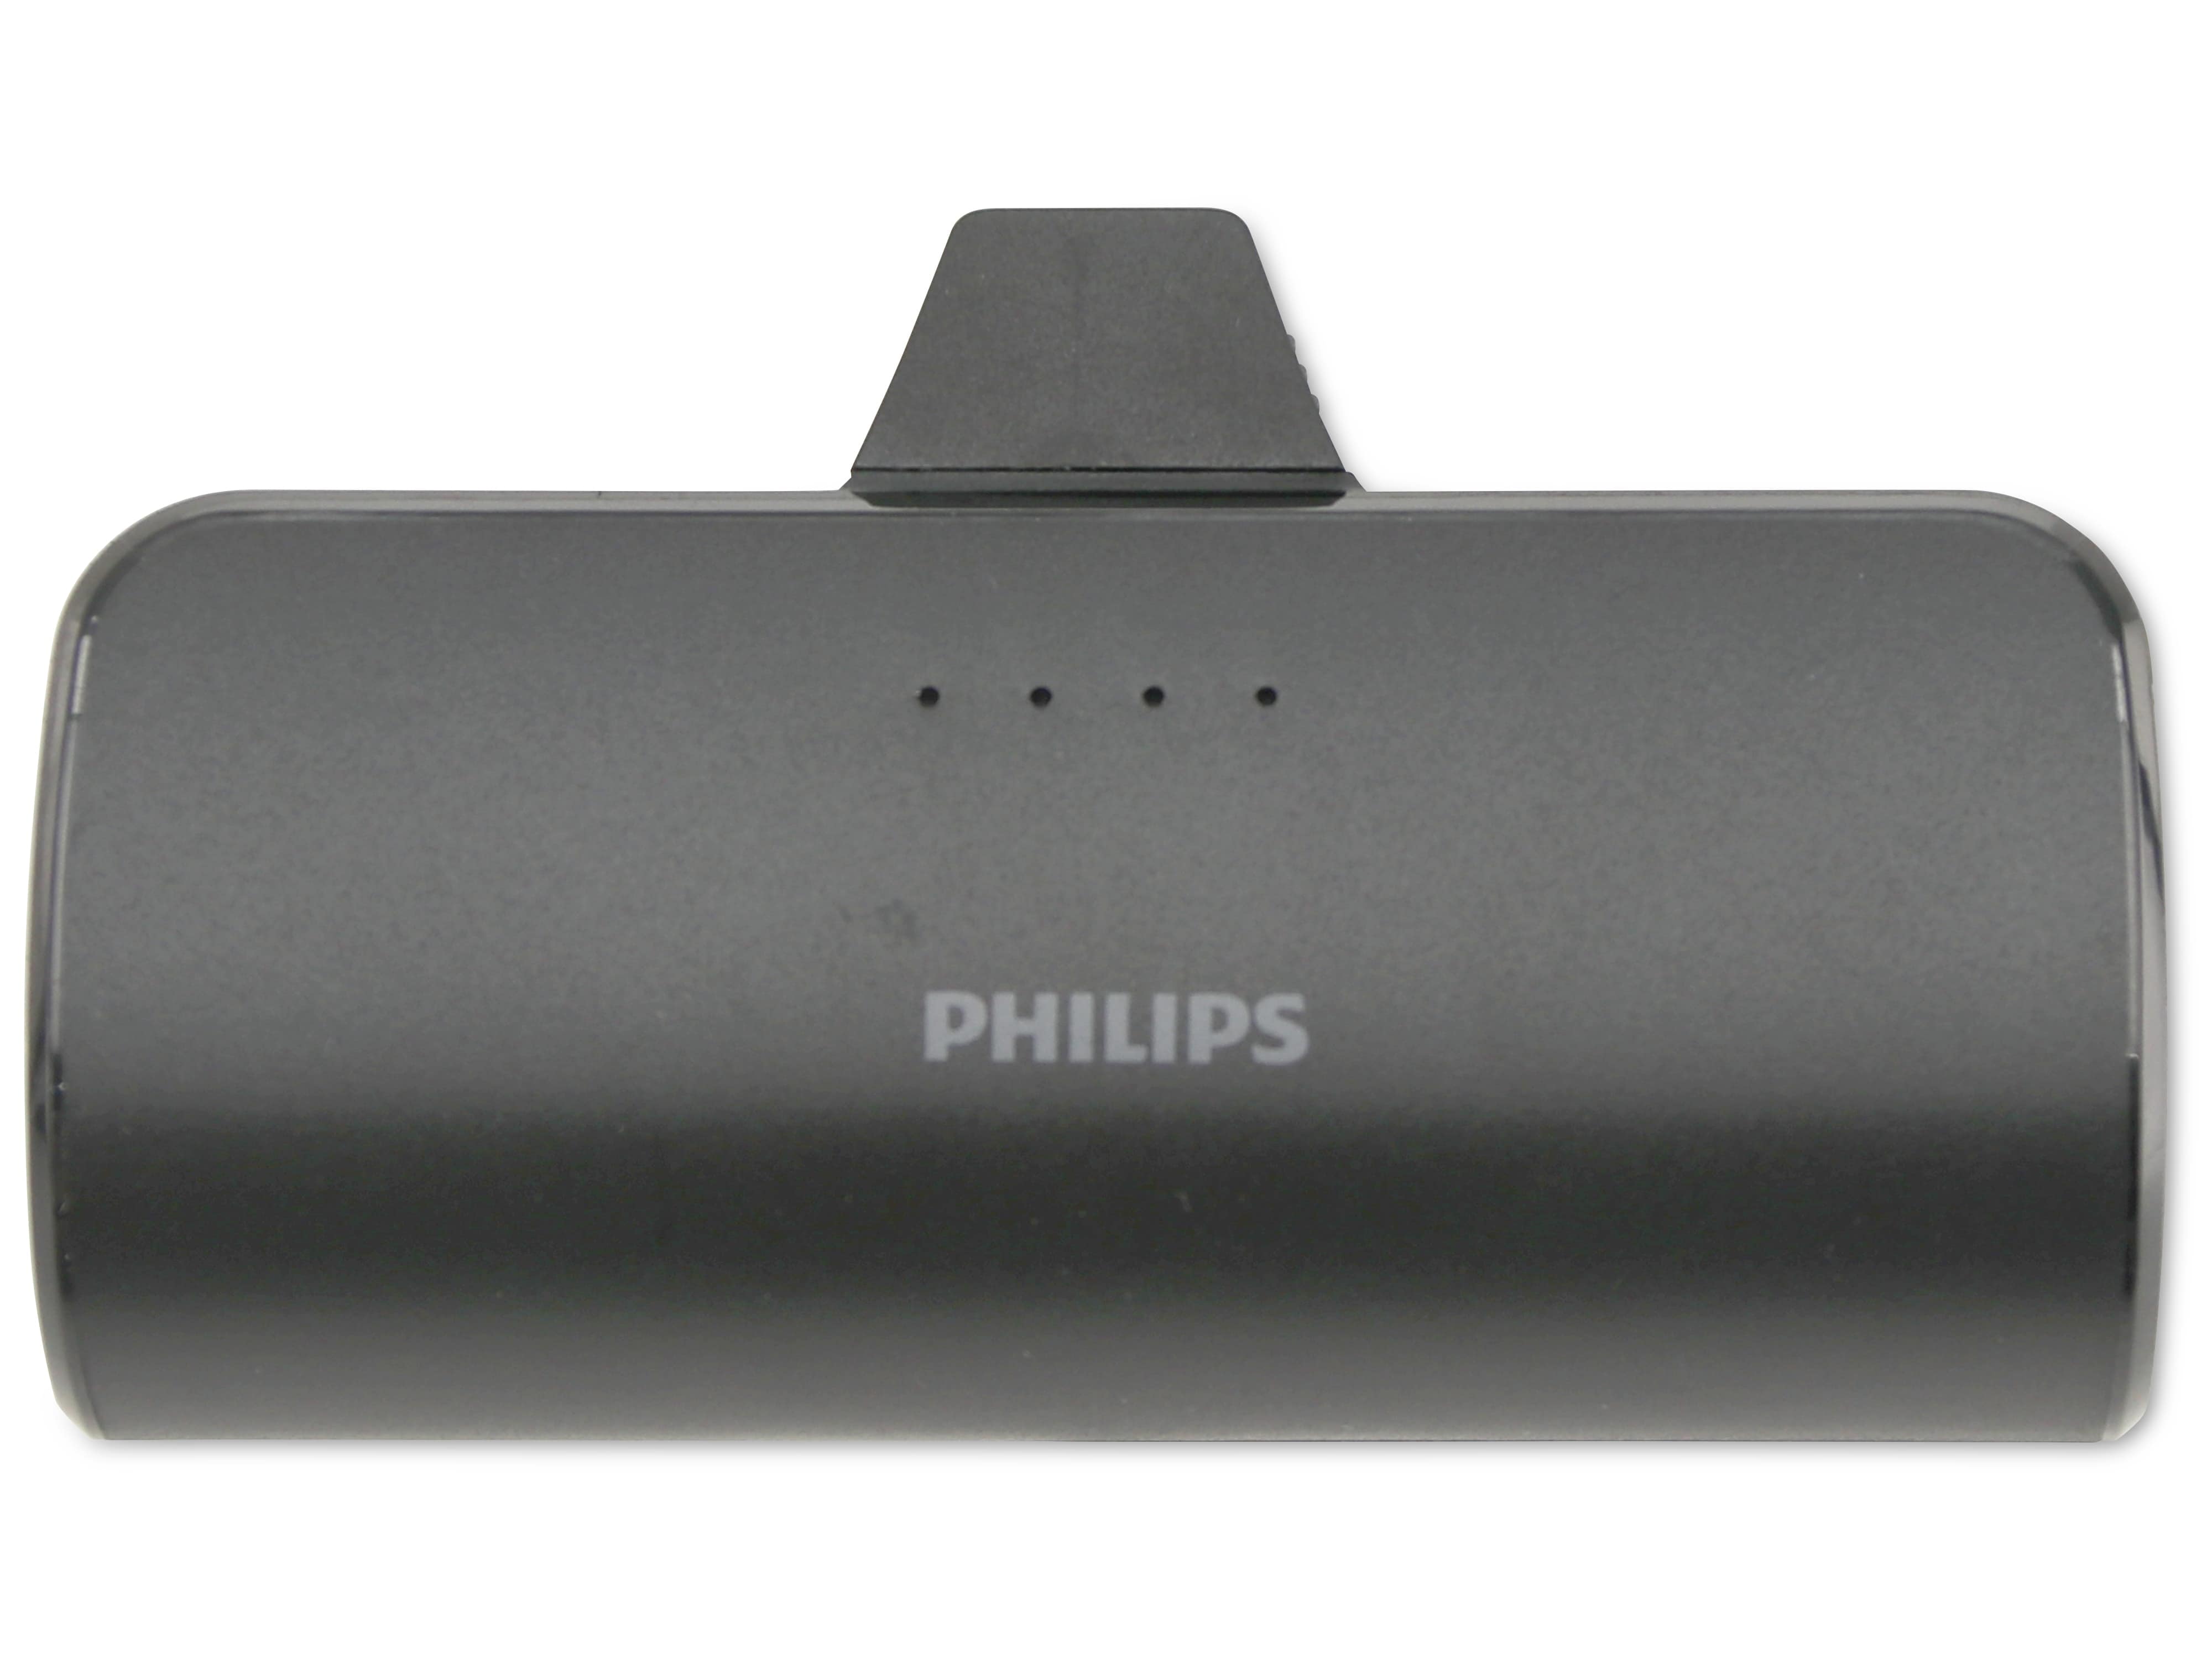 PHILIPS USB Powerbank DLP2510C, 2500 mAh, 2x USB-C